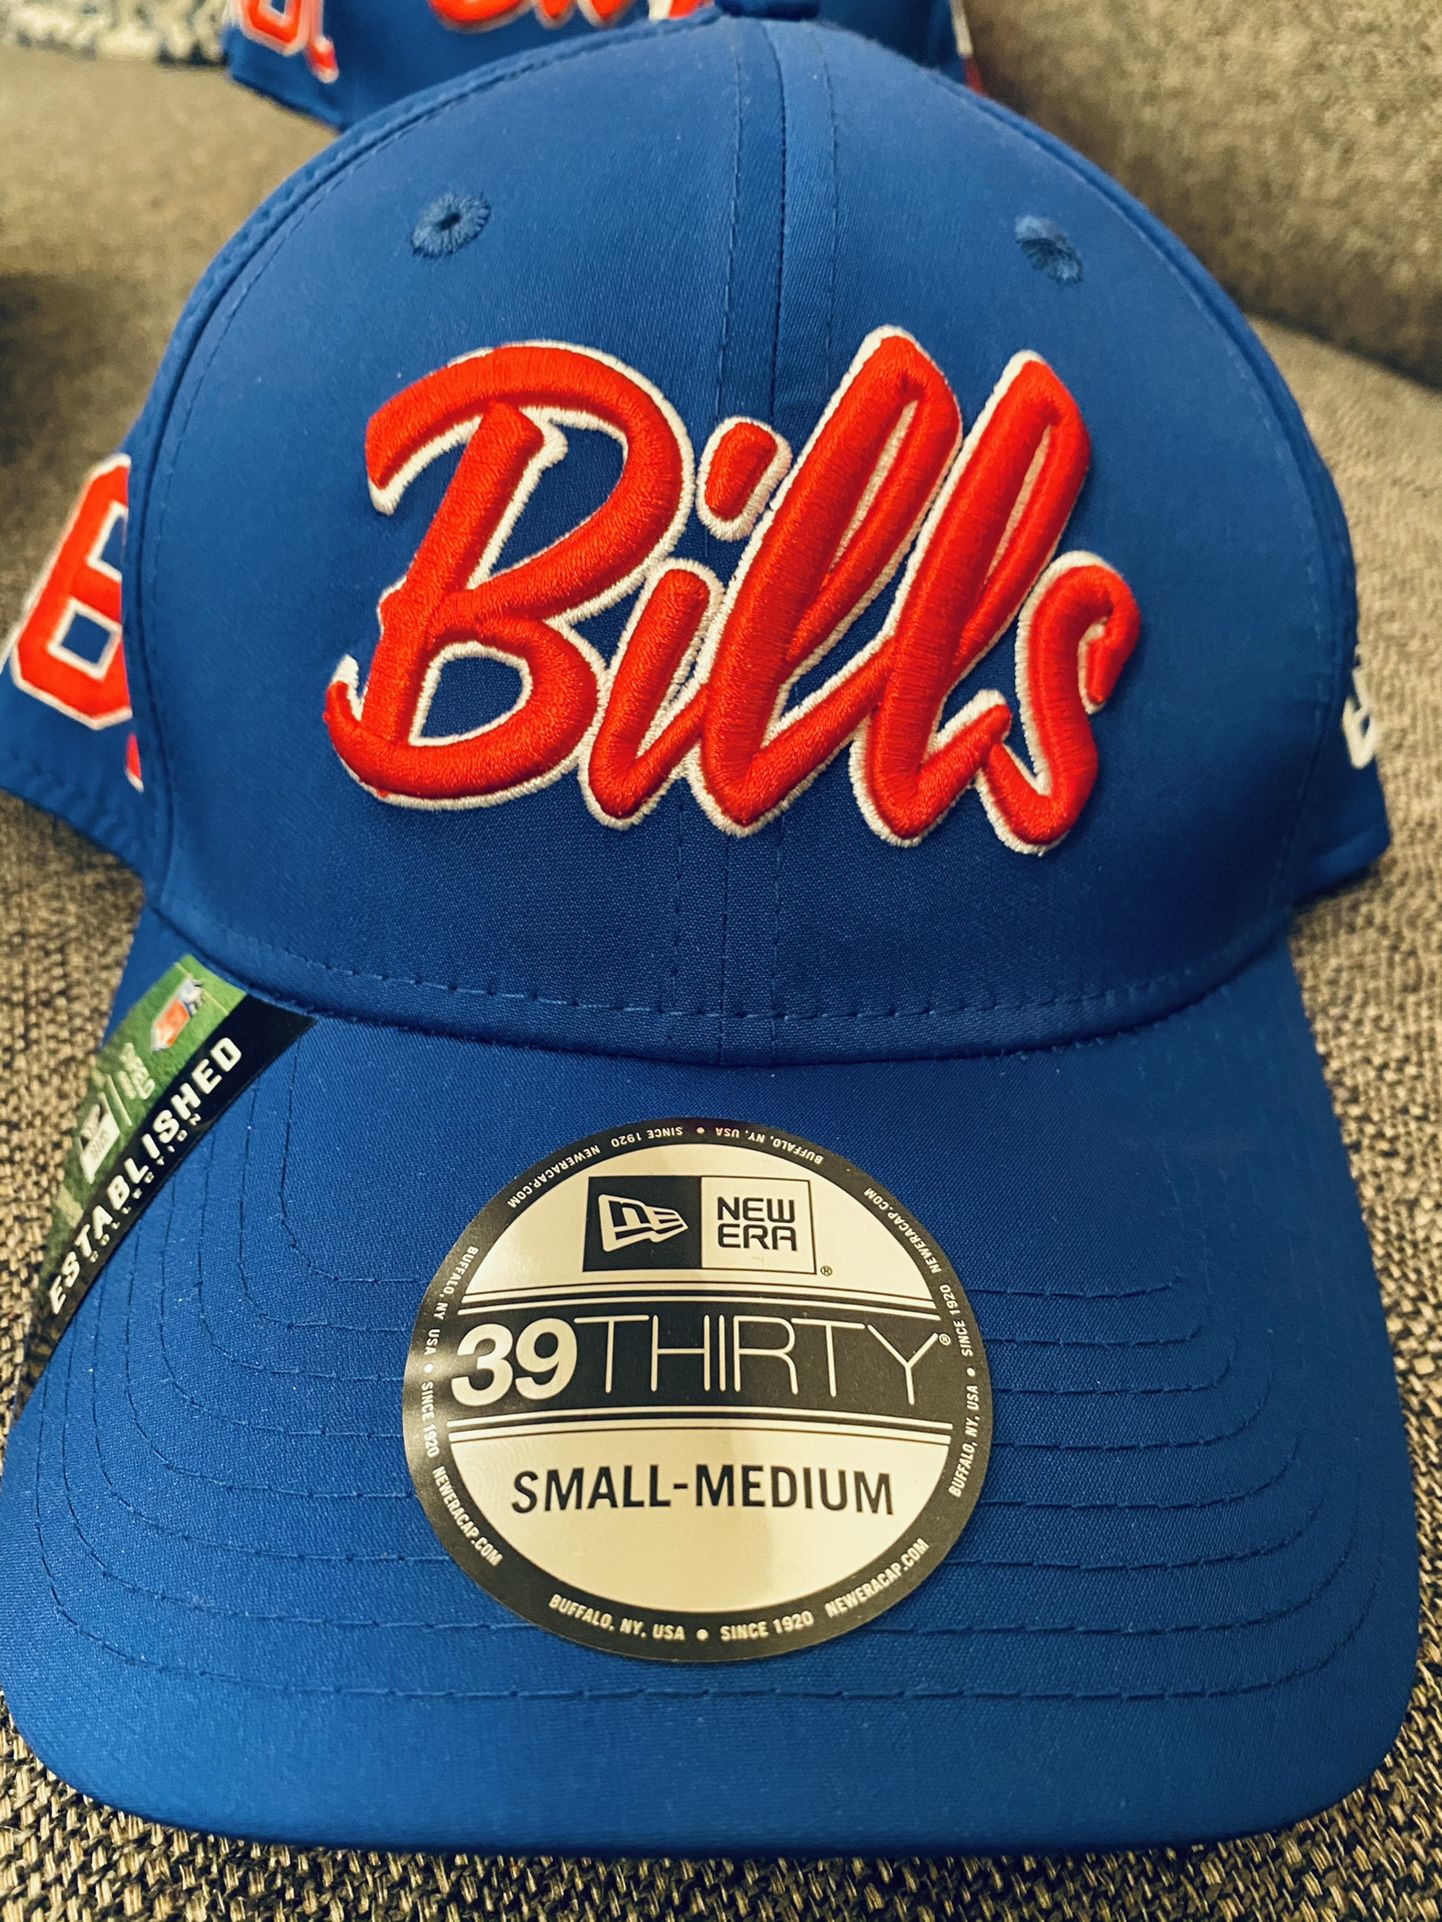 Buffalo Bills Caps